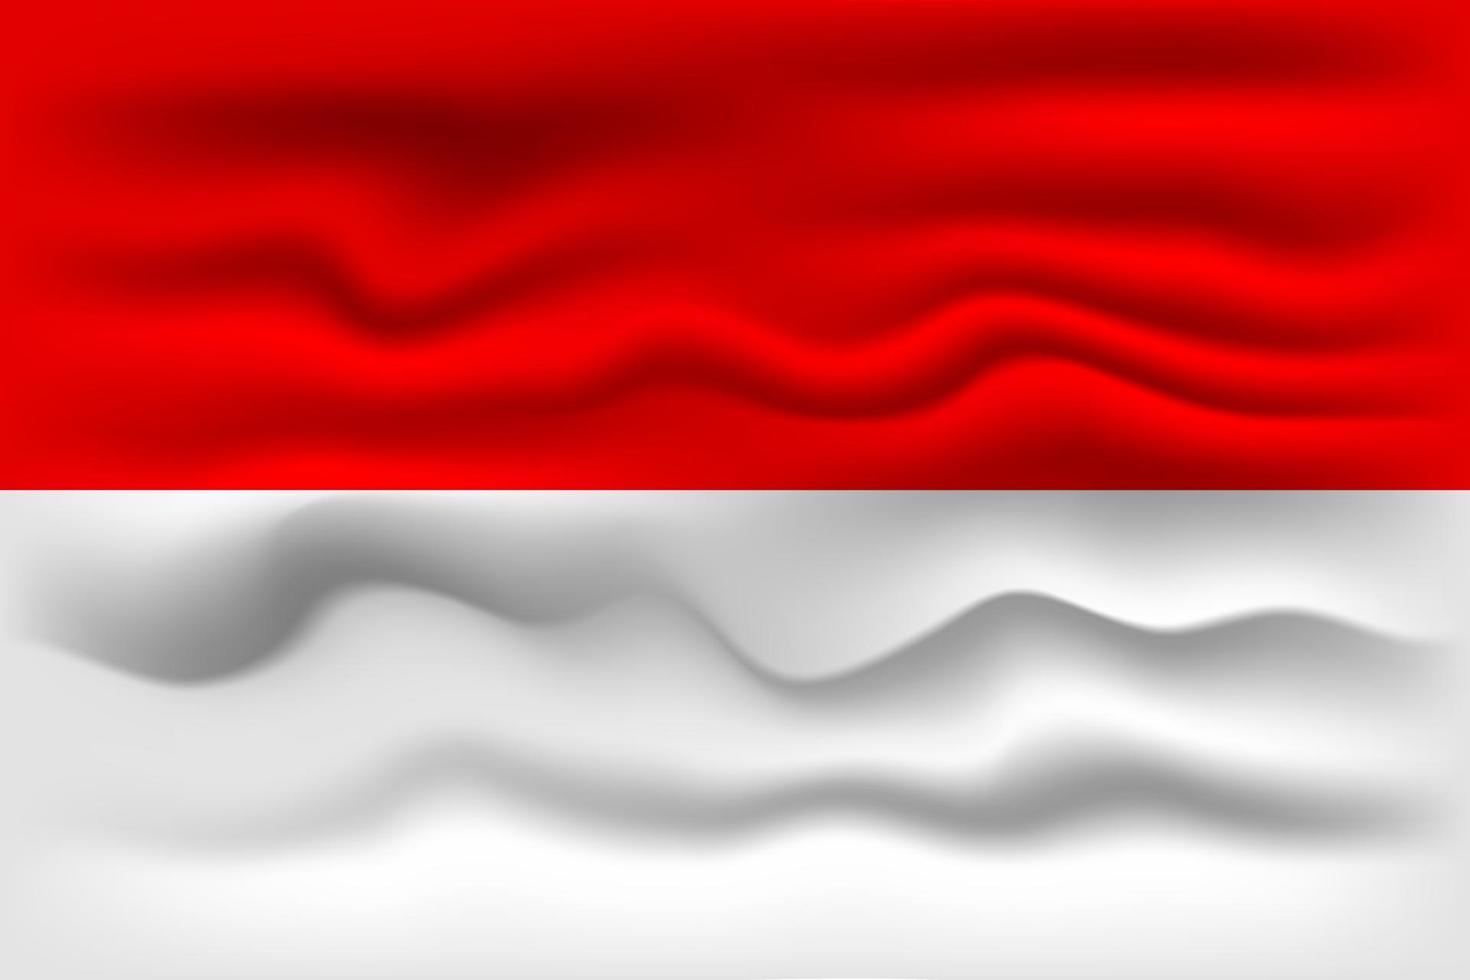 vinka flagga av de Land Indonesien. vektor illustration.